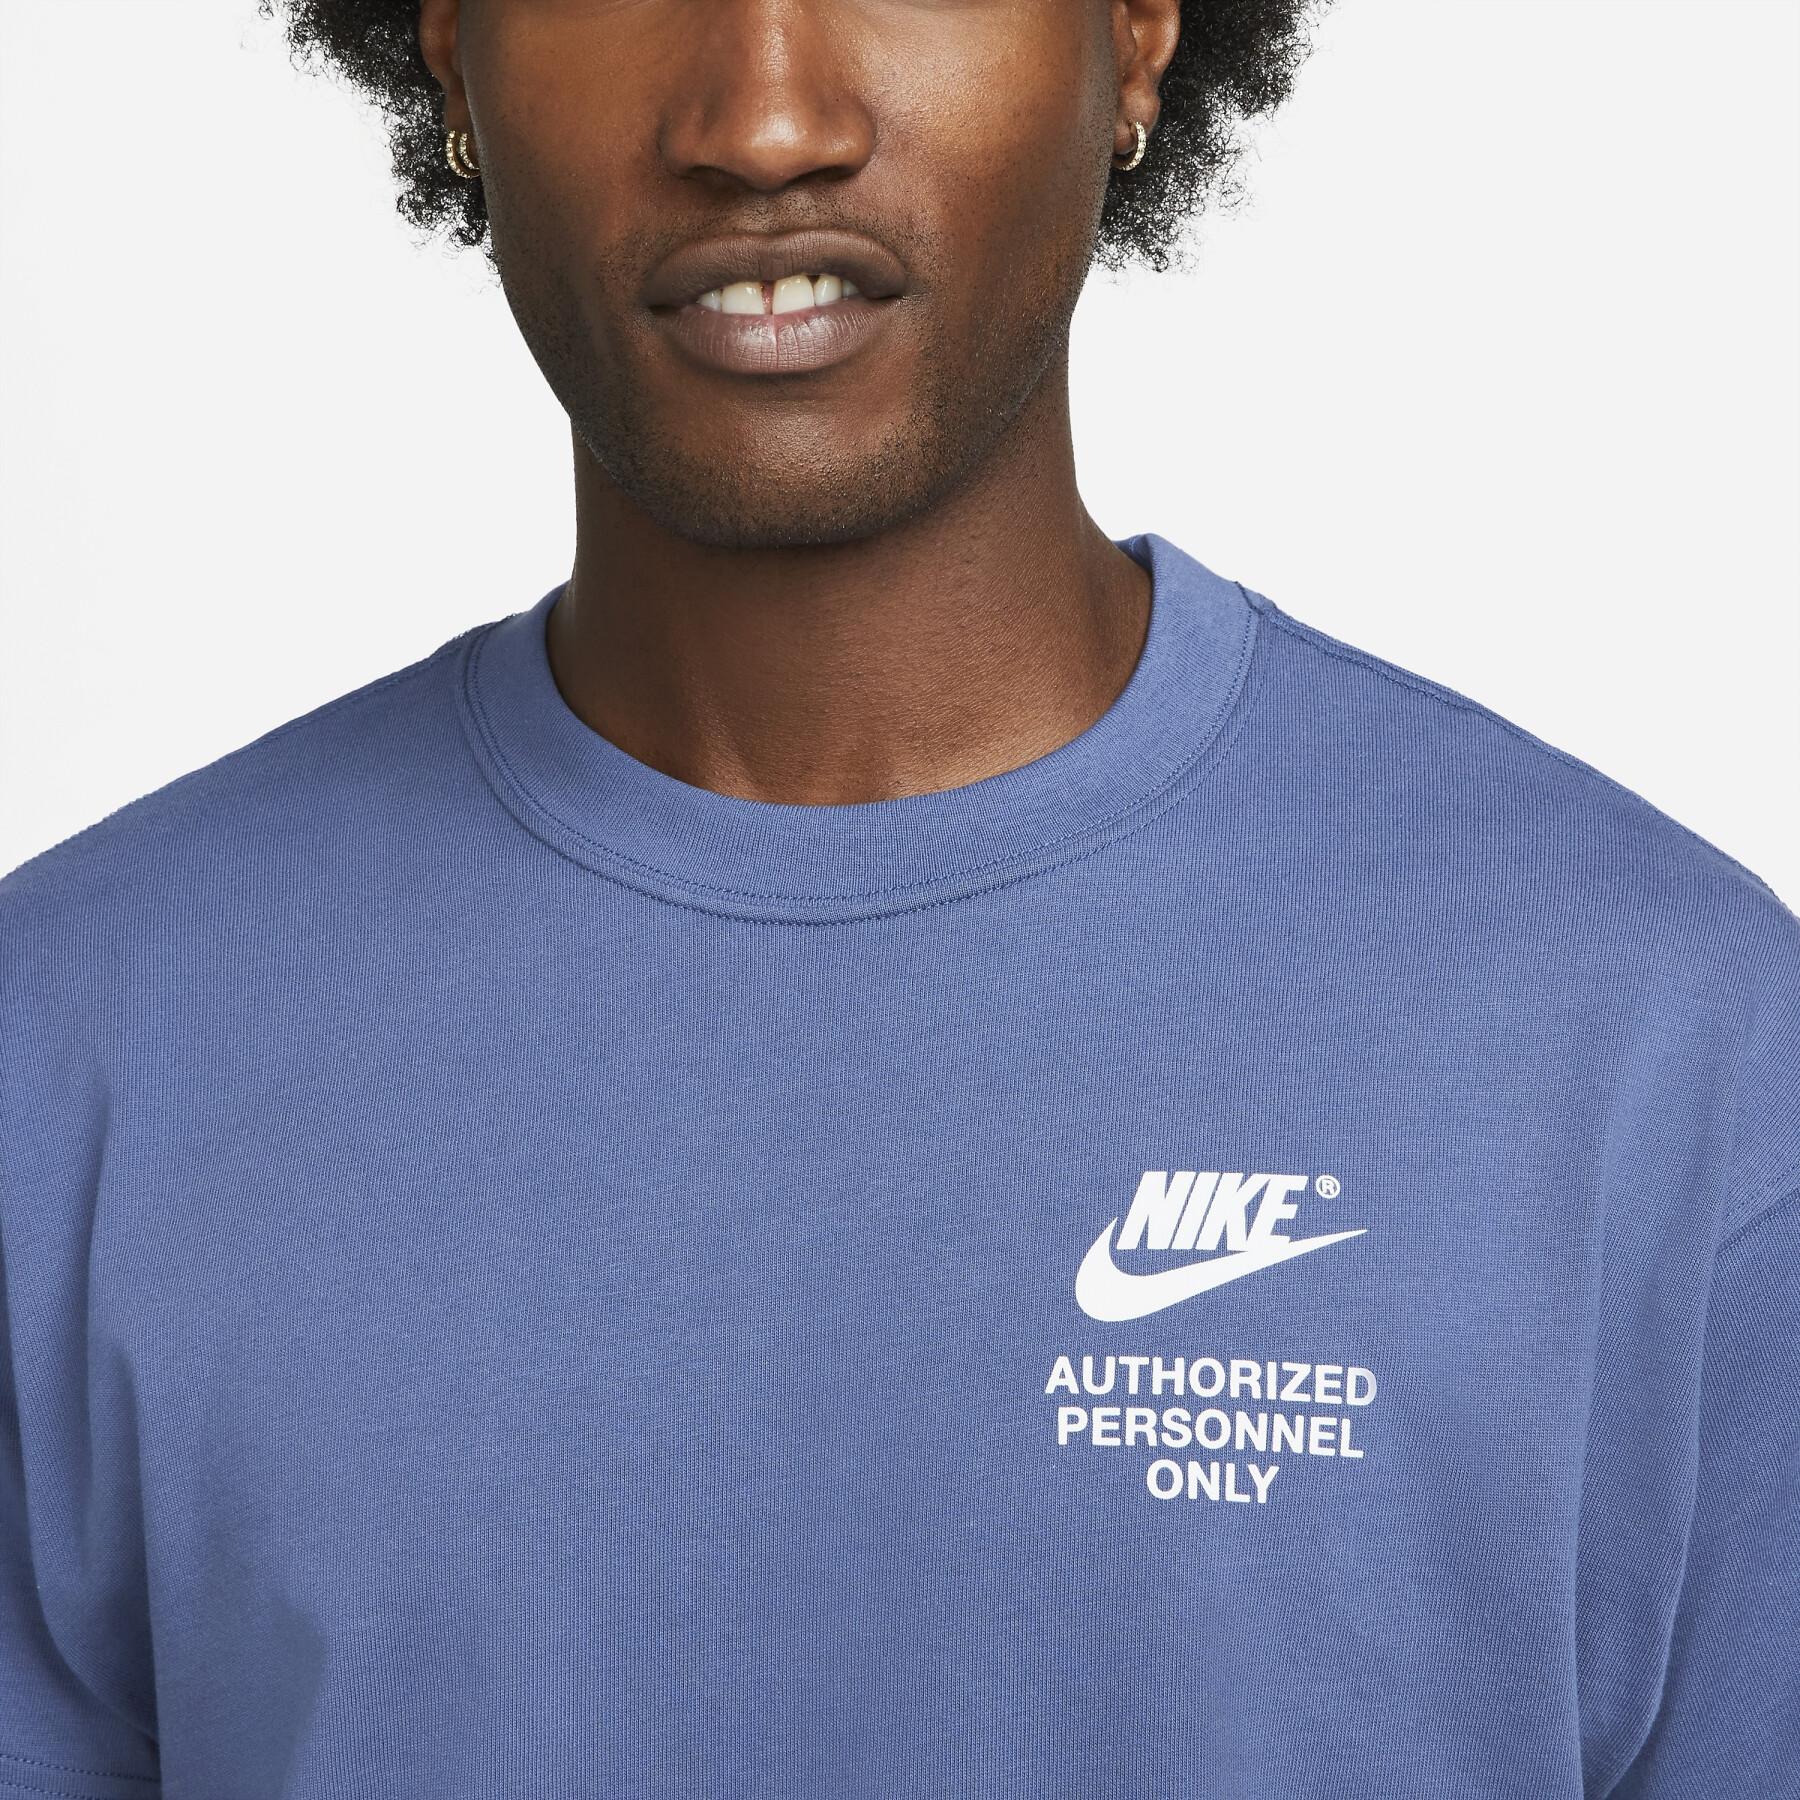 Koszulka Nike Authorized Personnel